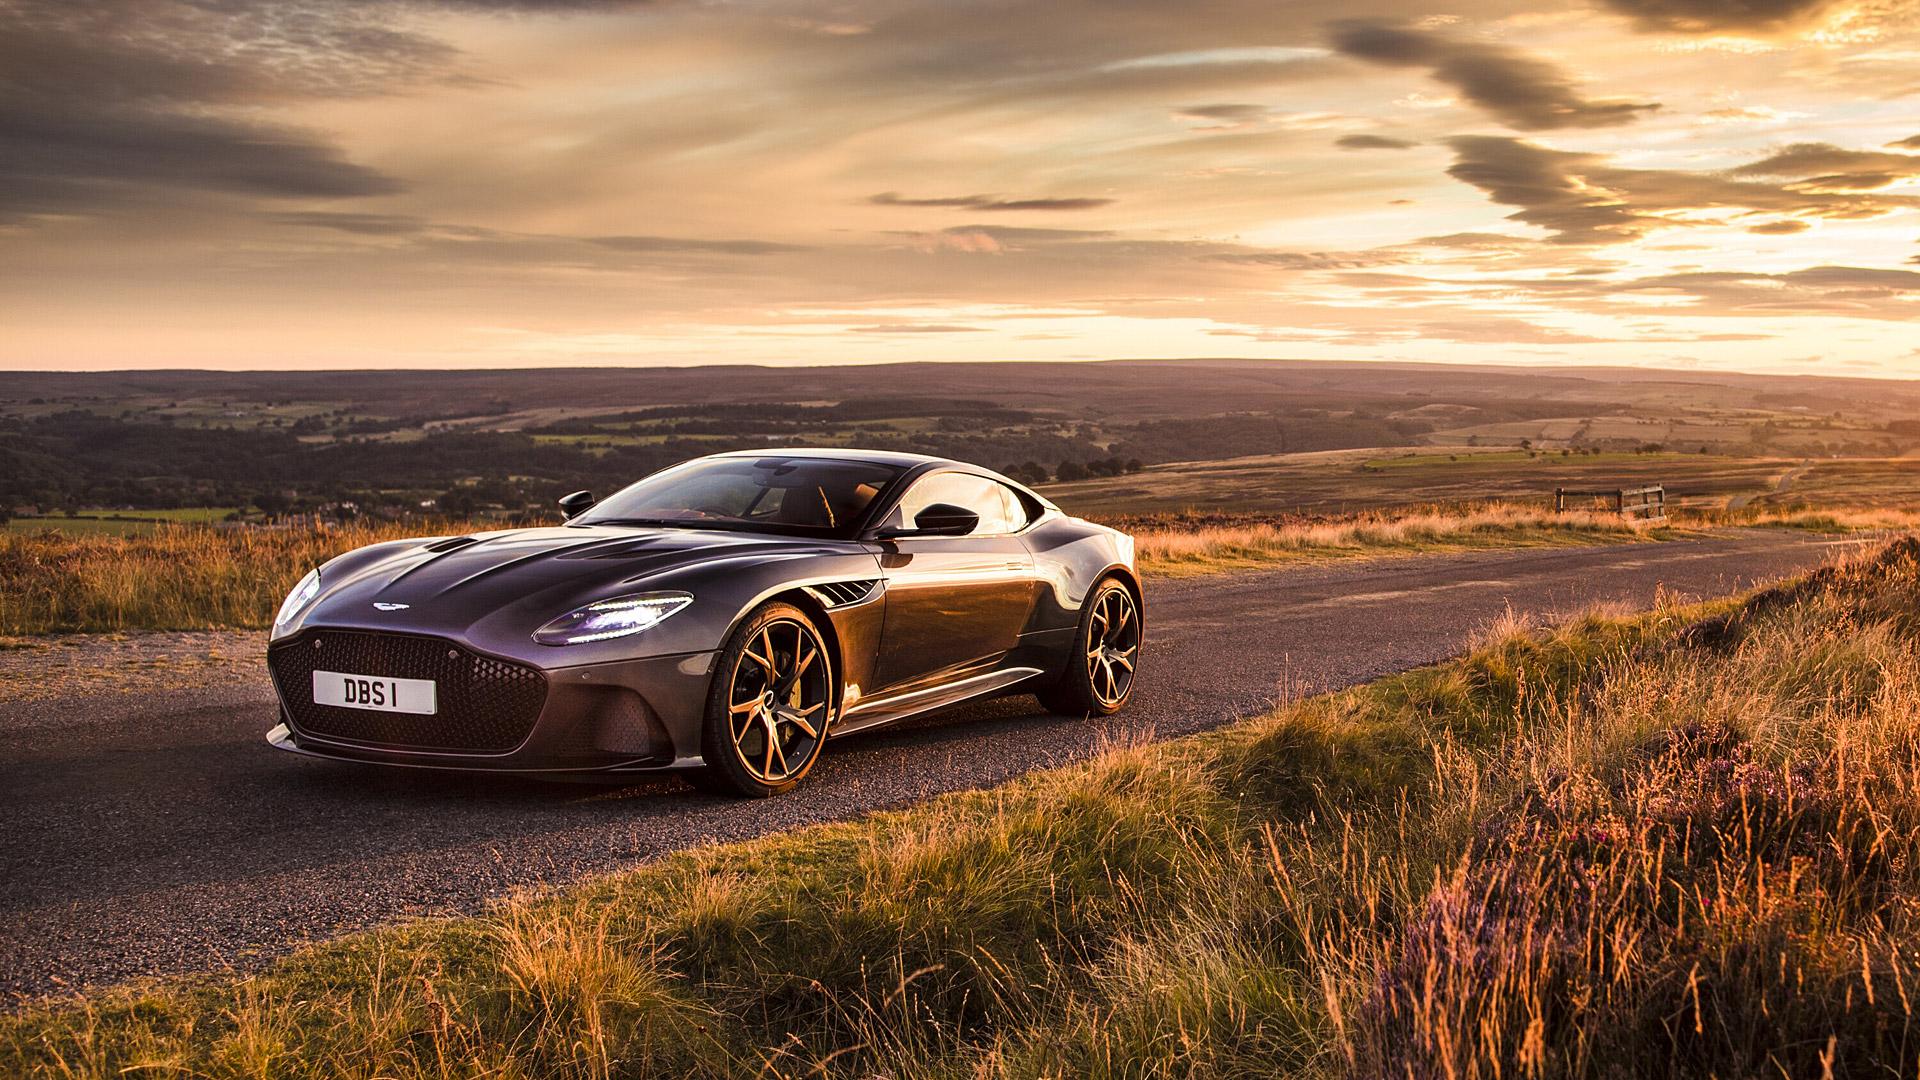 Aston Martin DBS Superleggera Volante Wallpapers - Wallpaper Cave